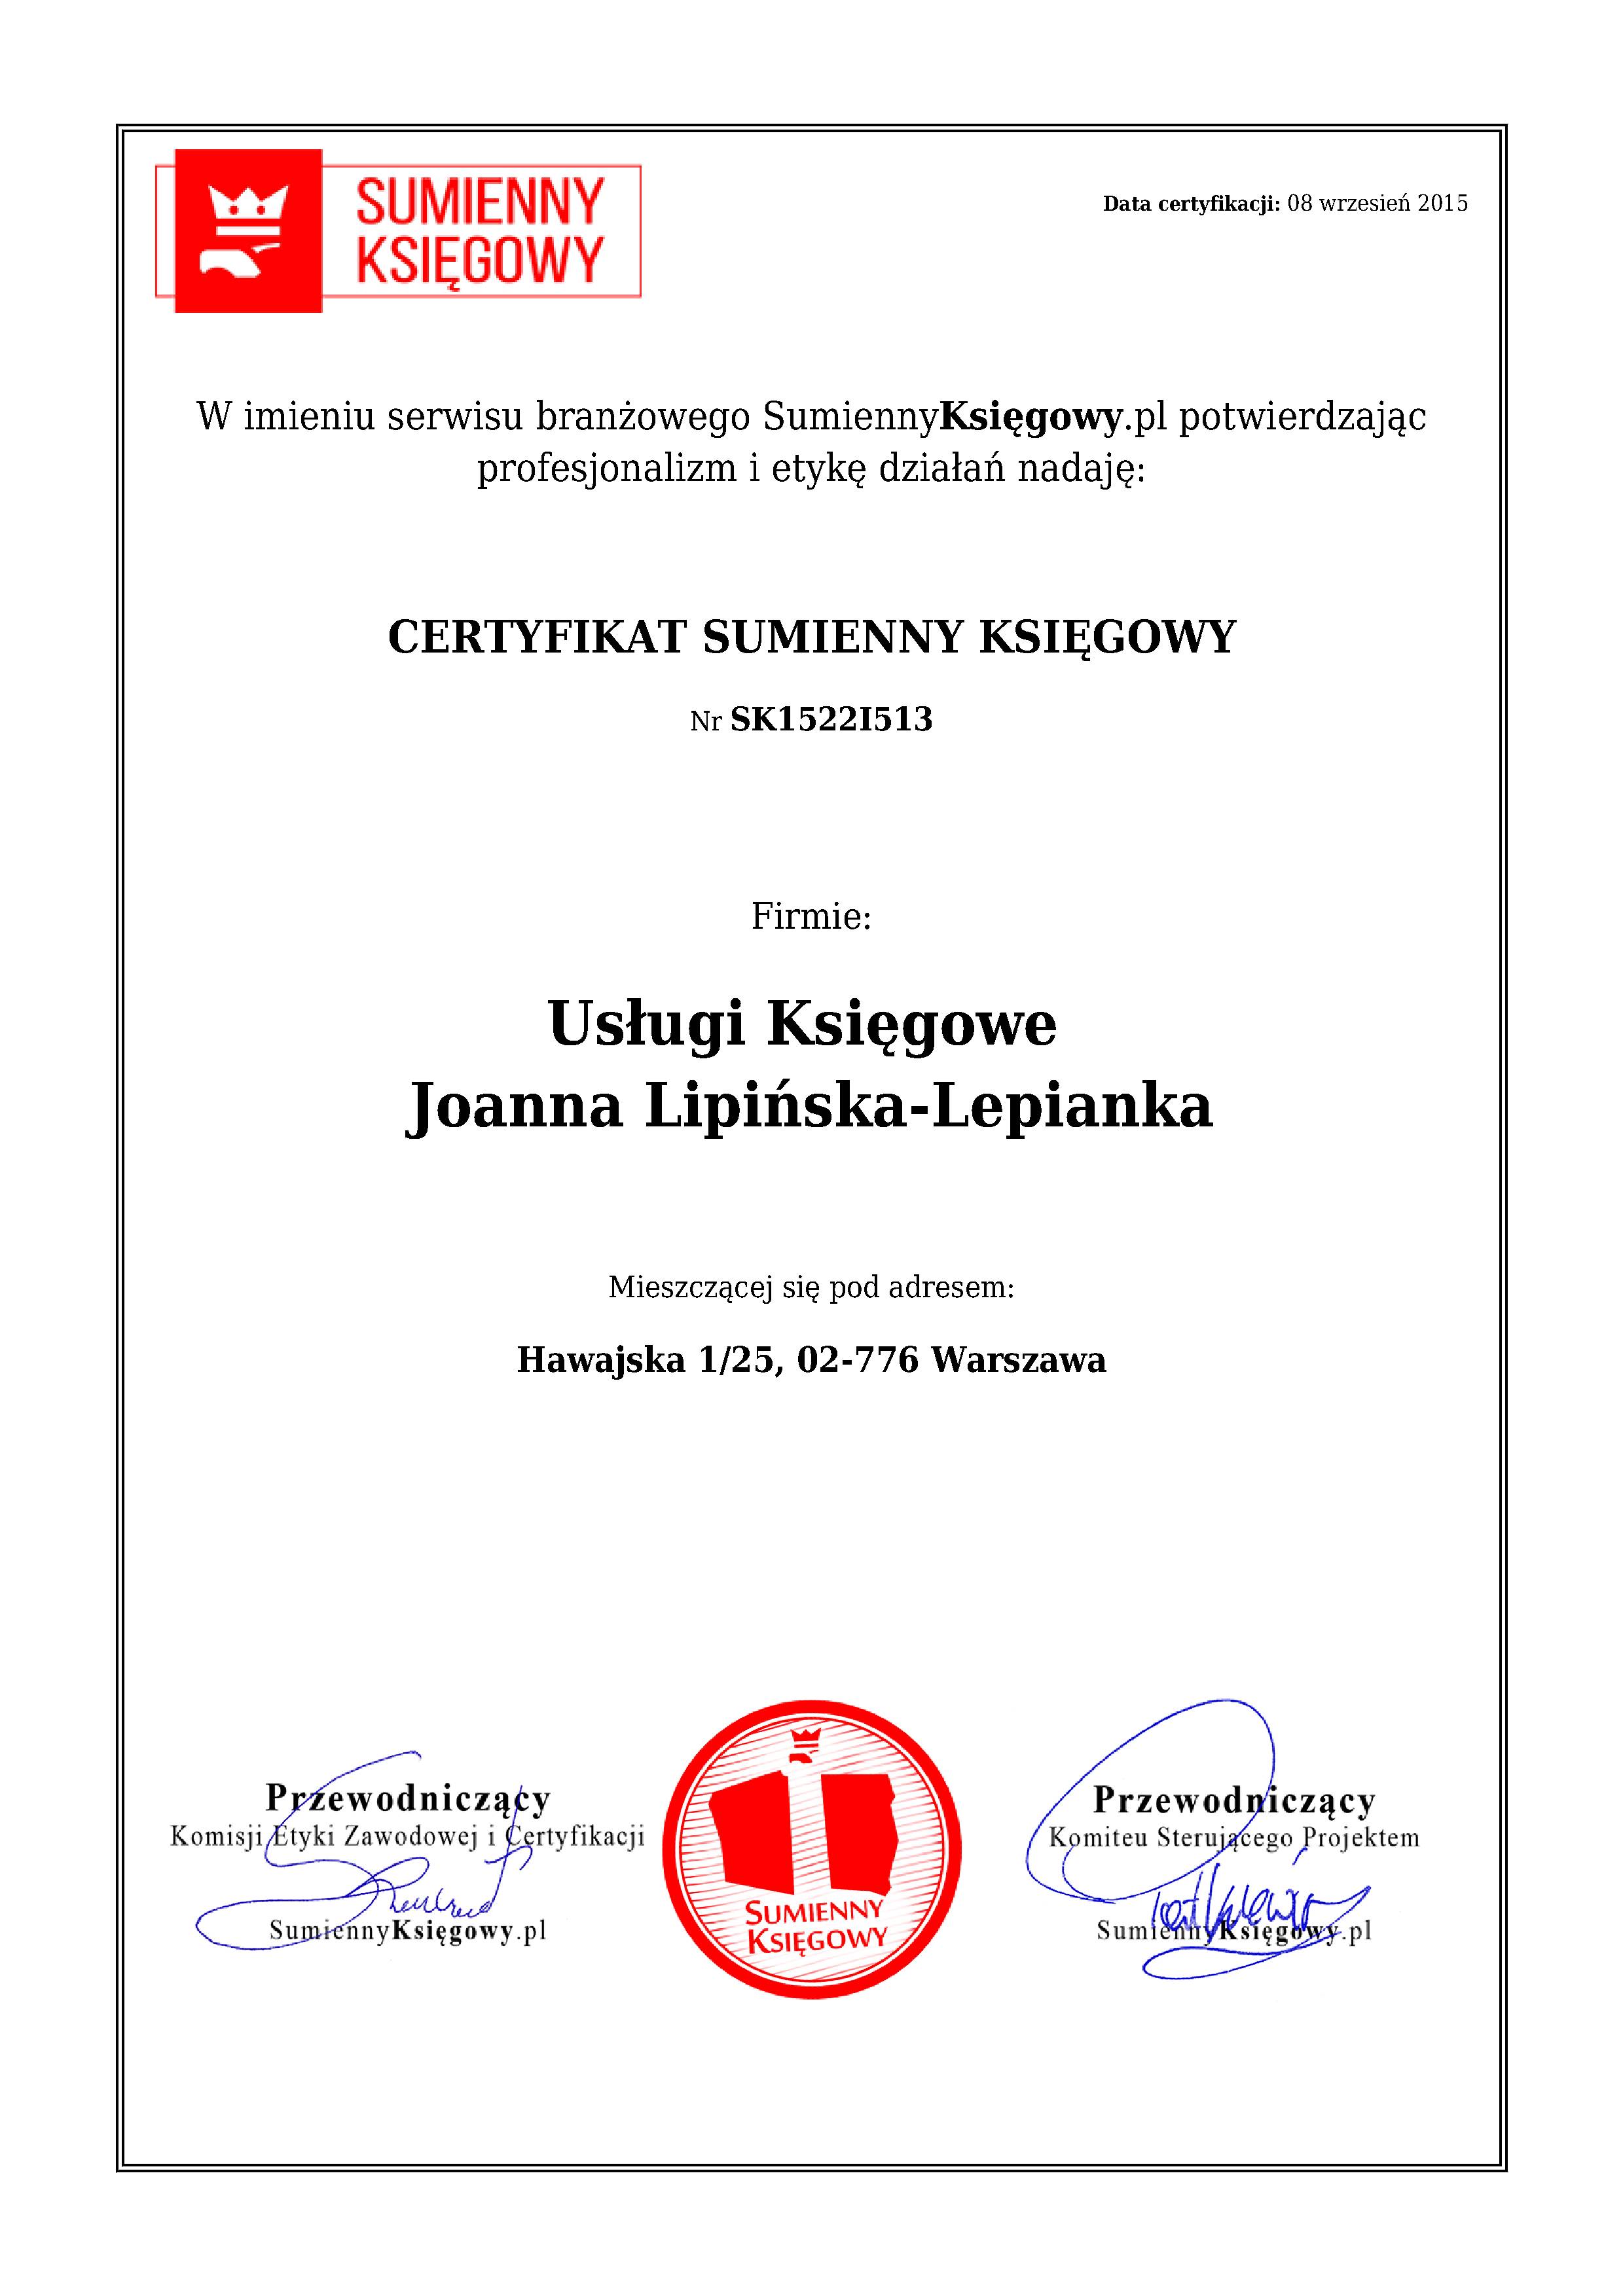 Usługi Księgowe Joanna  Lipińska-Lepianka  certyfikat 1